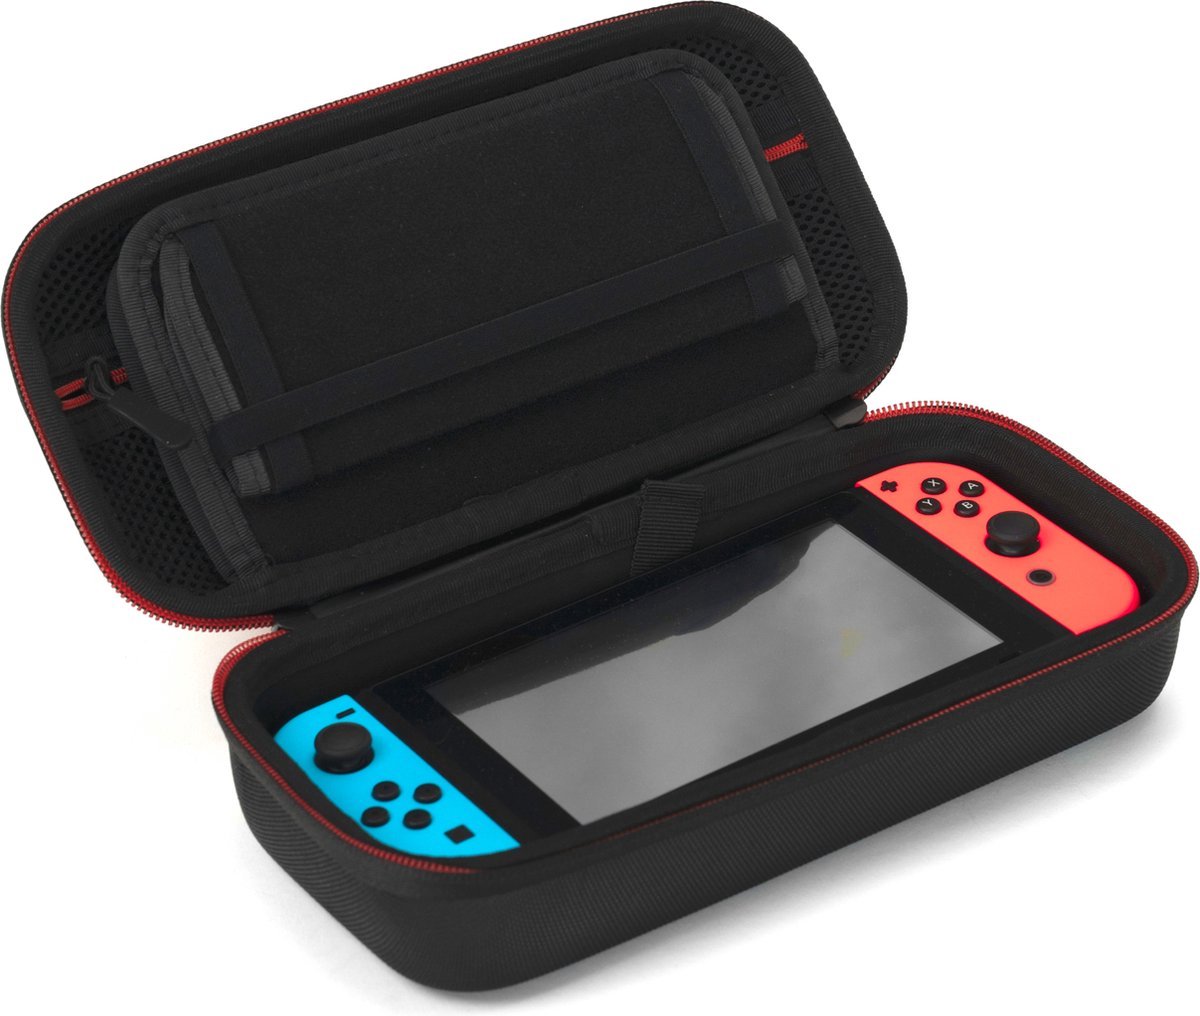 Jeux pour Nintendo Switch et OLED,Deluxe Housse Sacoche Coque